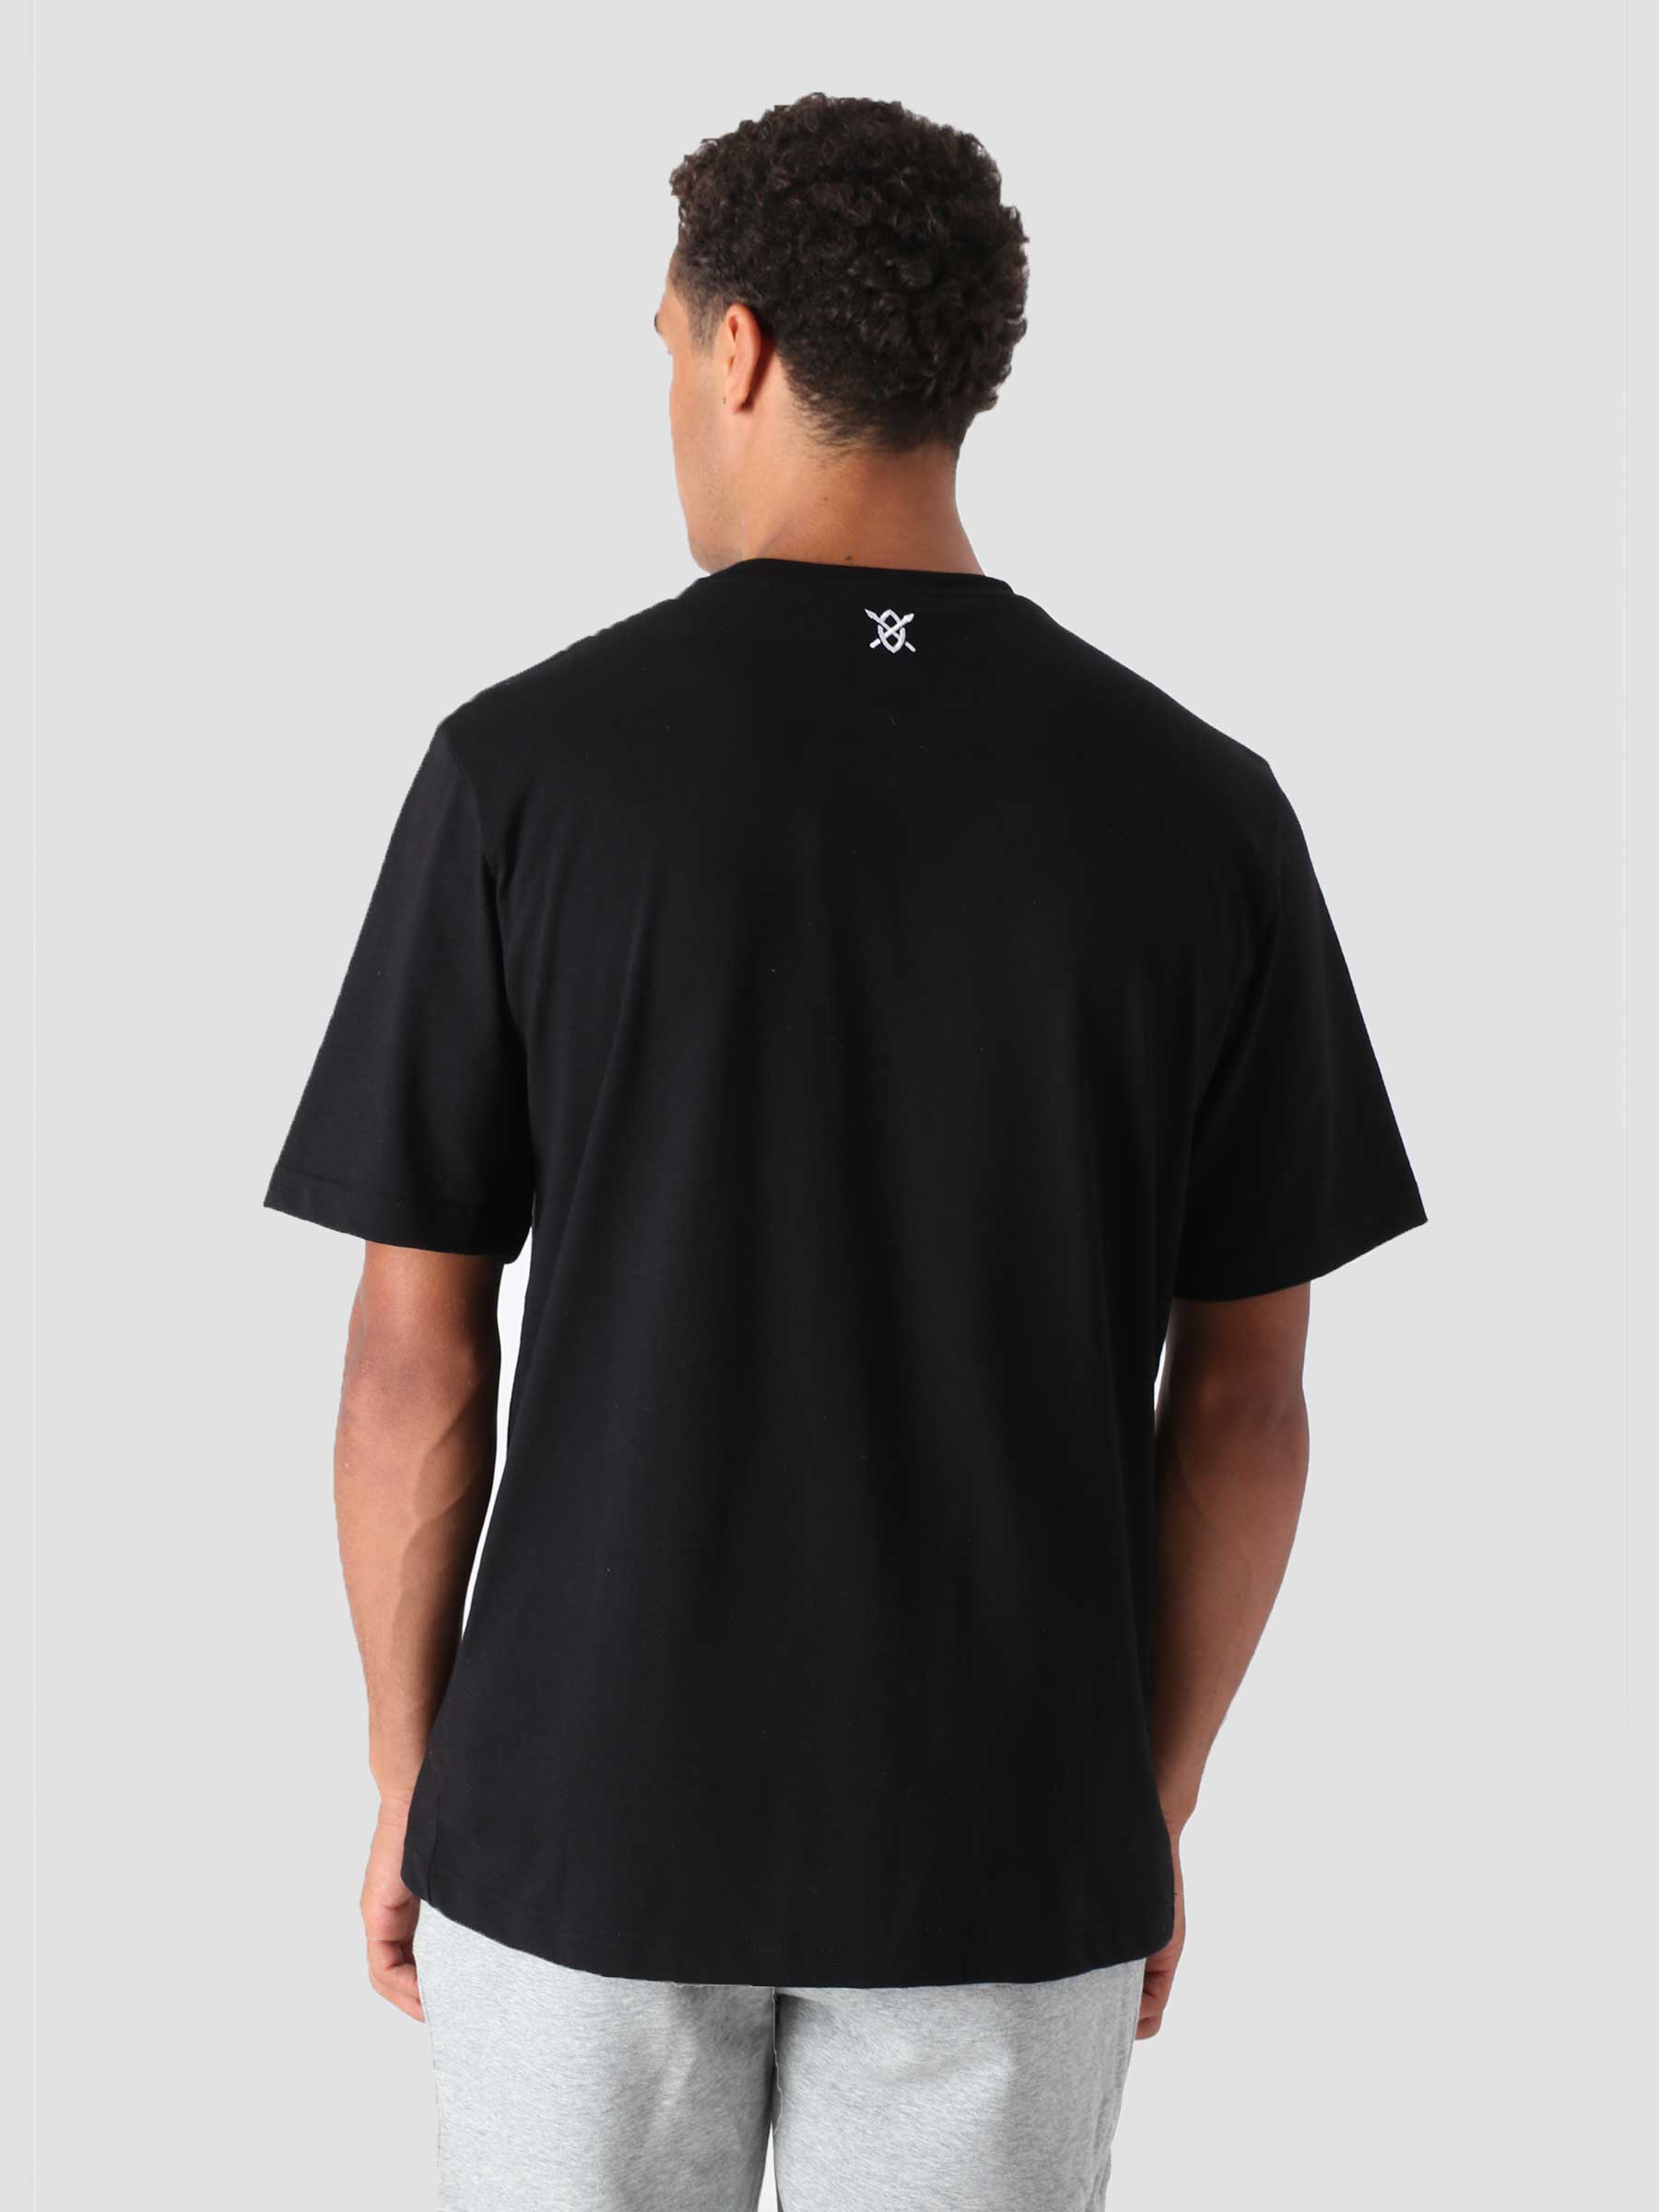 Alias T-Shirt Black NOST32